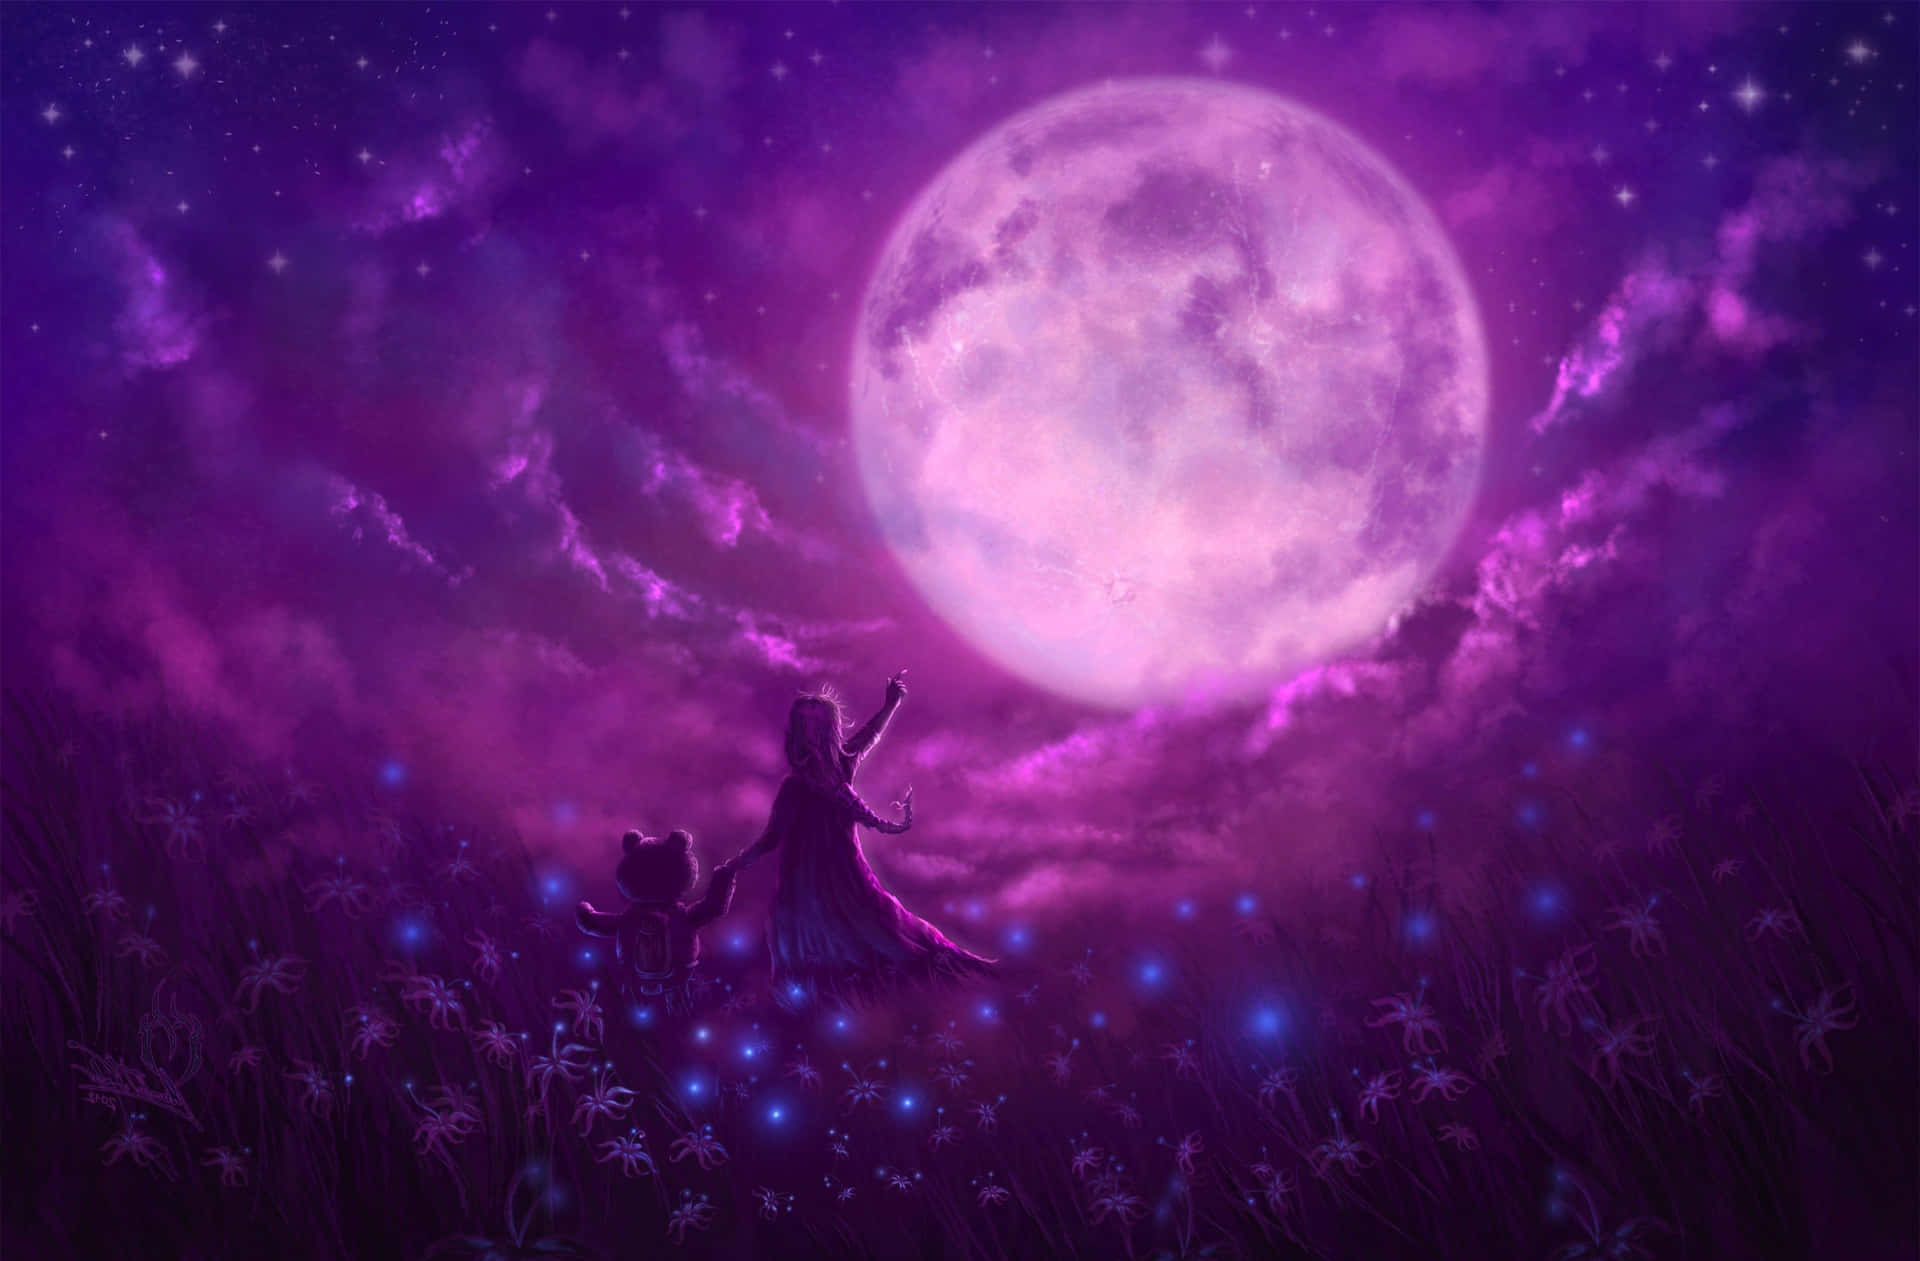 Download "A beautiful pink full moon illuminates the night sky